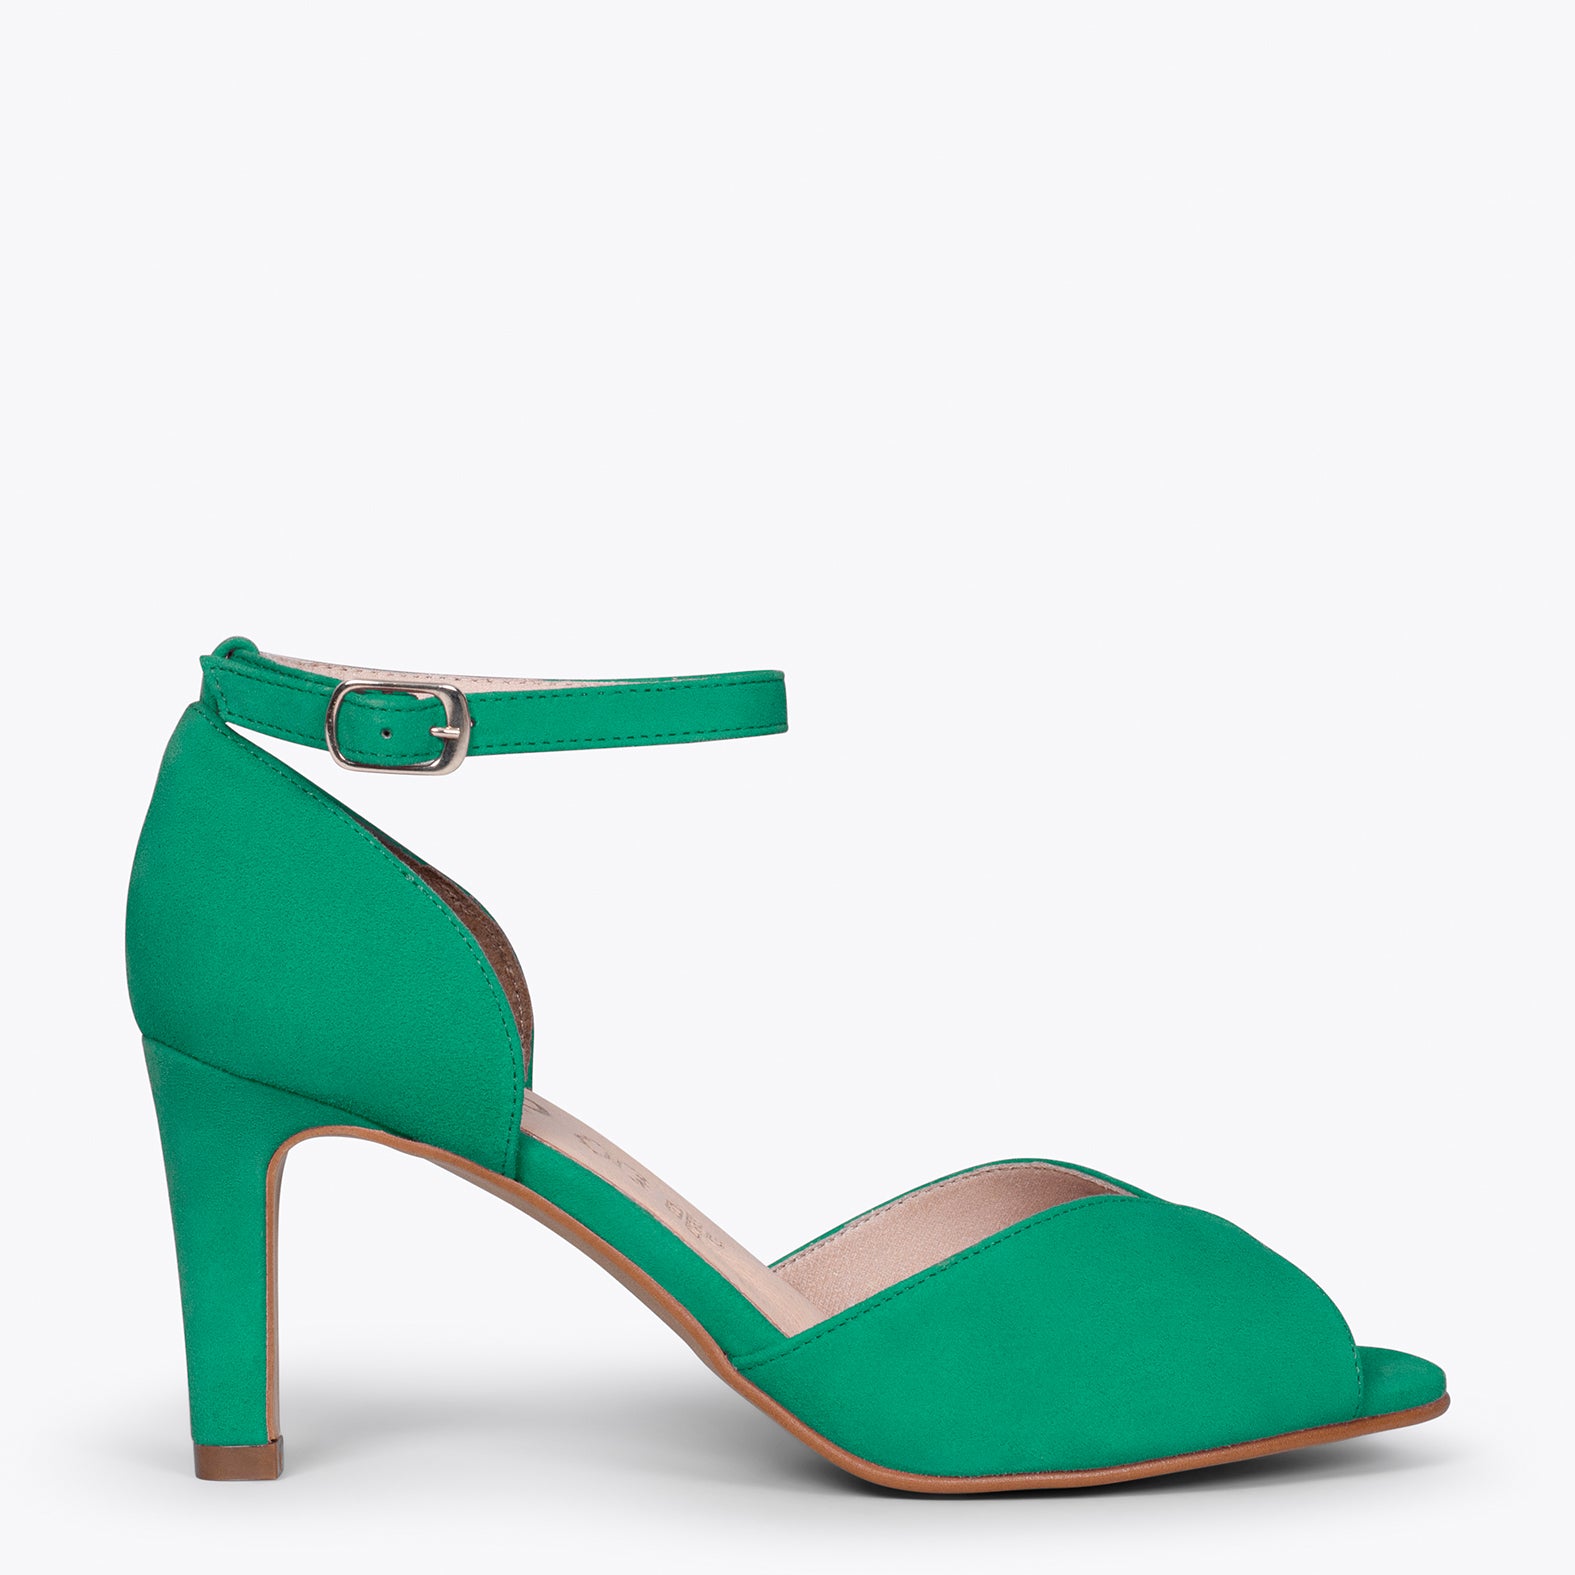 PETAL – GREEN high heel sandal